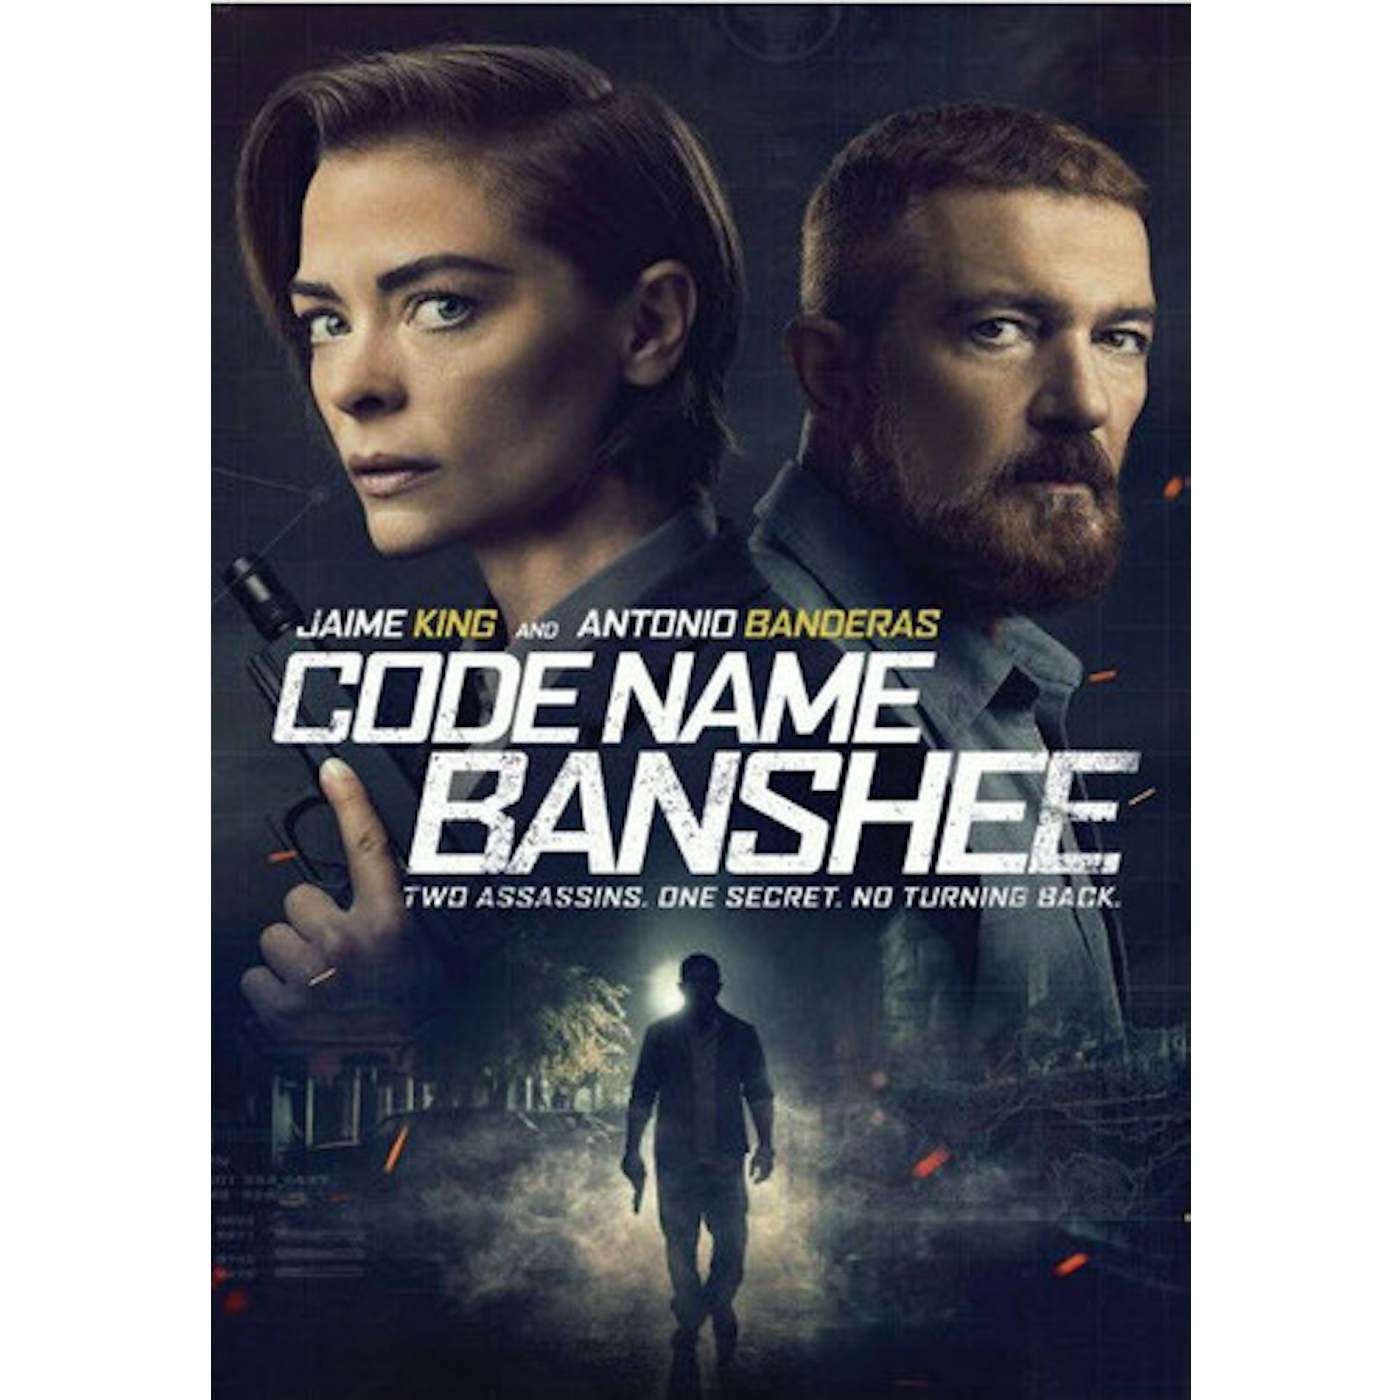 CODENAME BANSHEE DVD